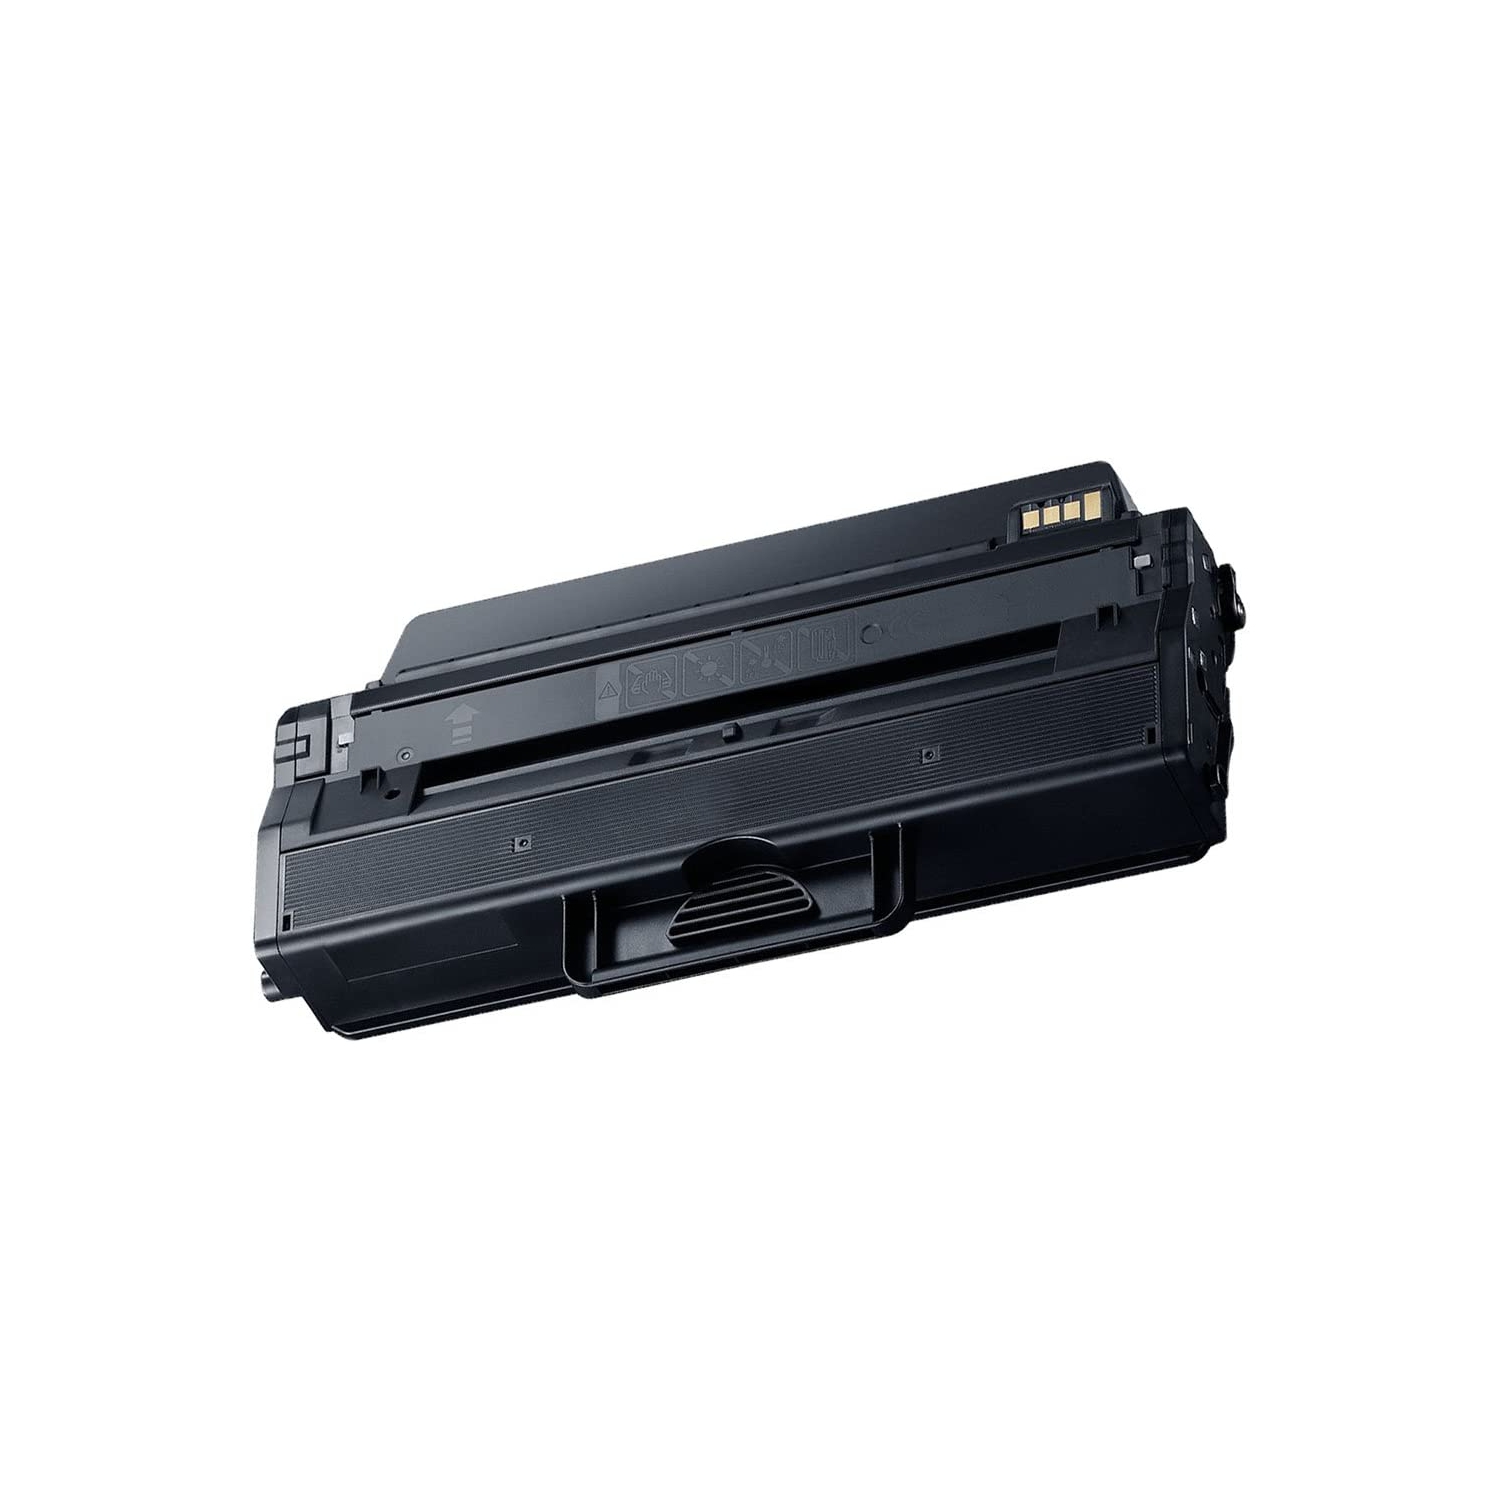 Inkfirst® Compatible Toner Cartridge D115L MLT-D115L Replacement for Samsung Xpress SL-M2880 M2830 M2620 M2820 M2670 M2870